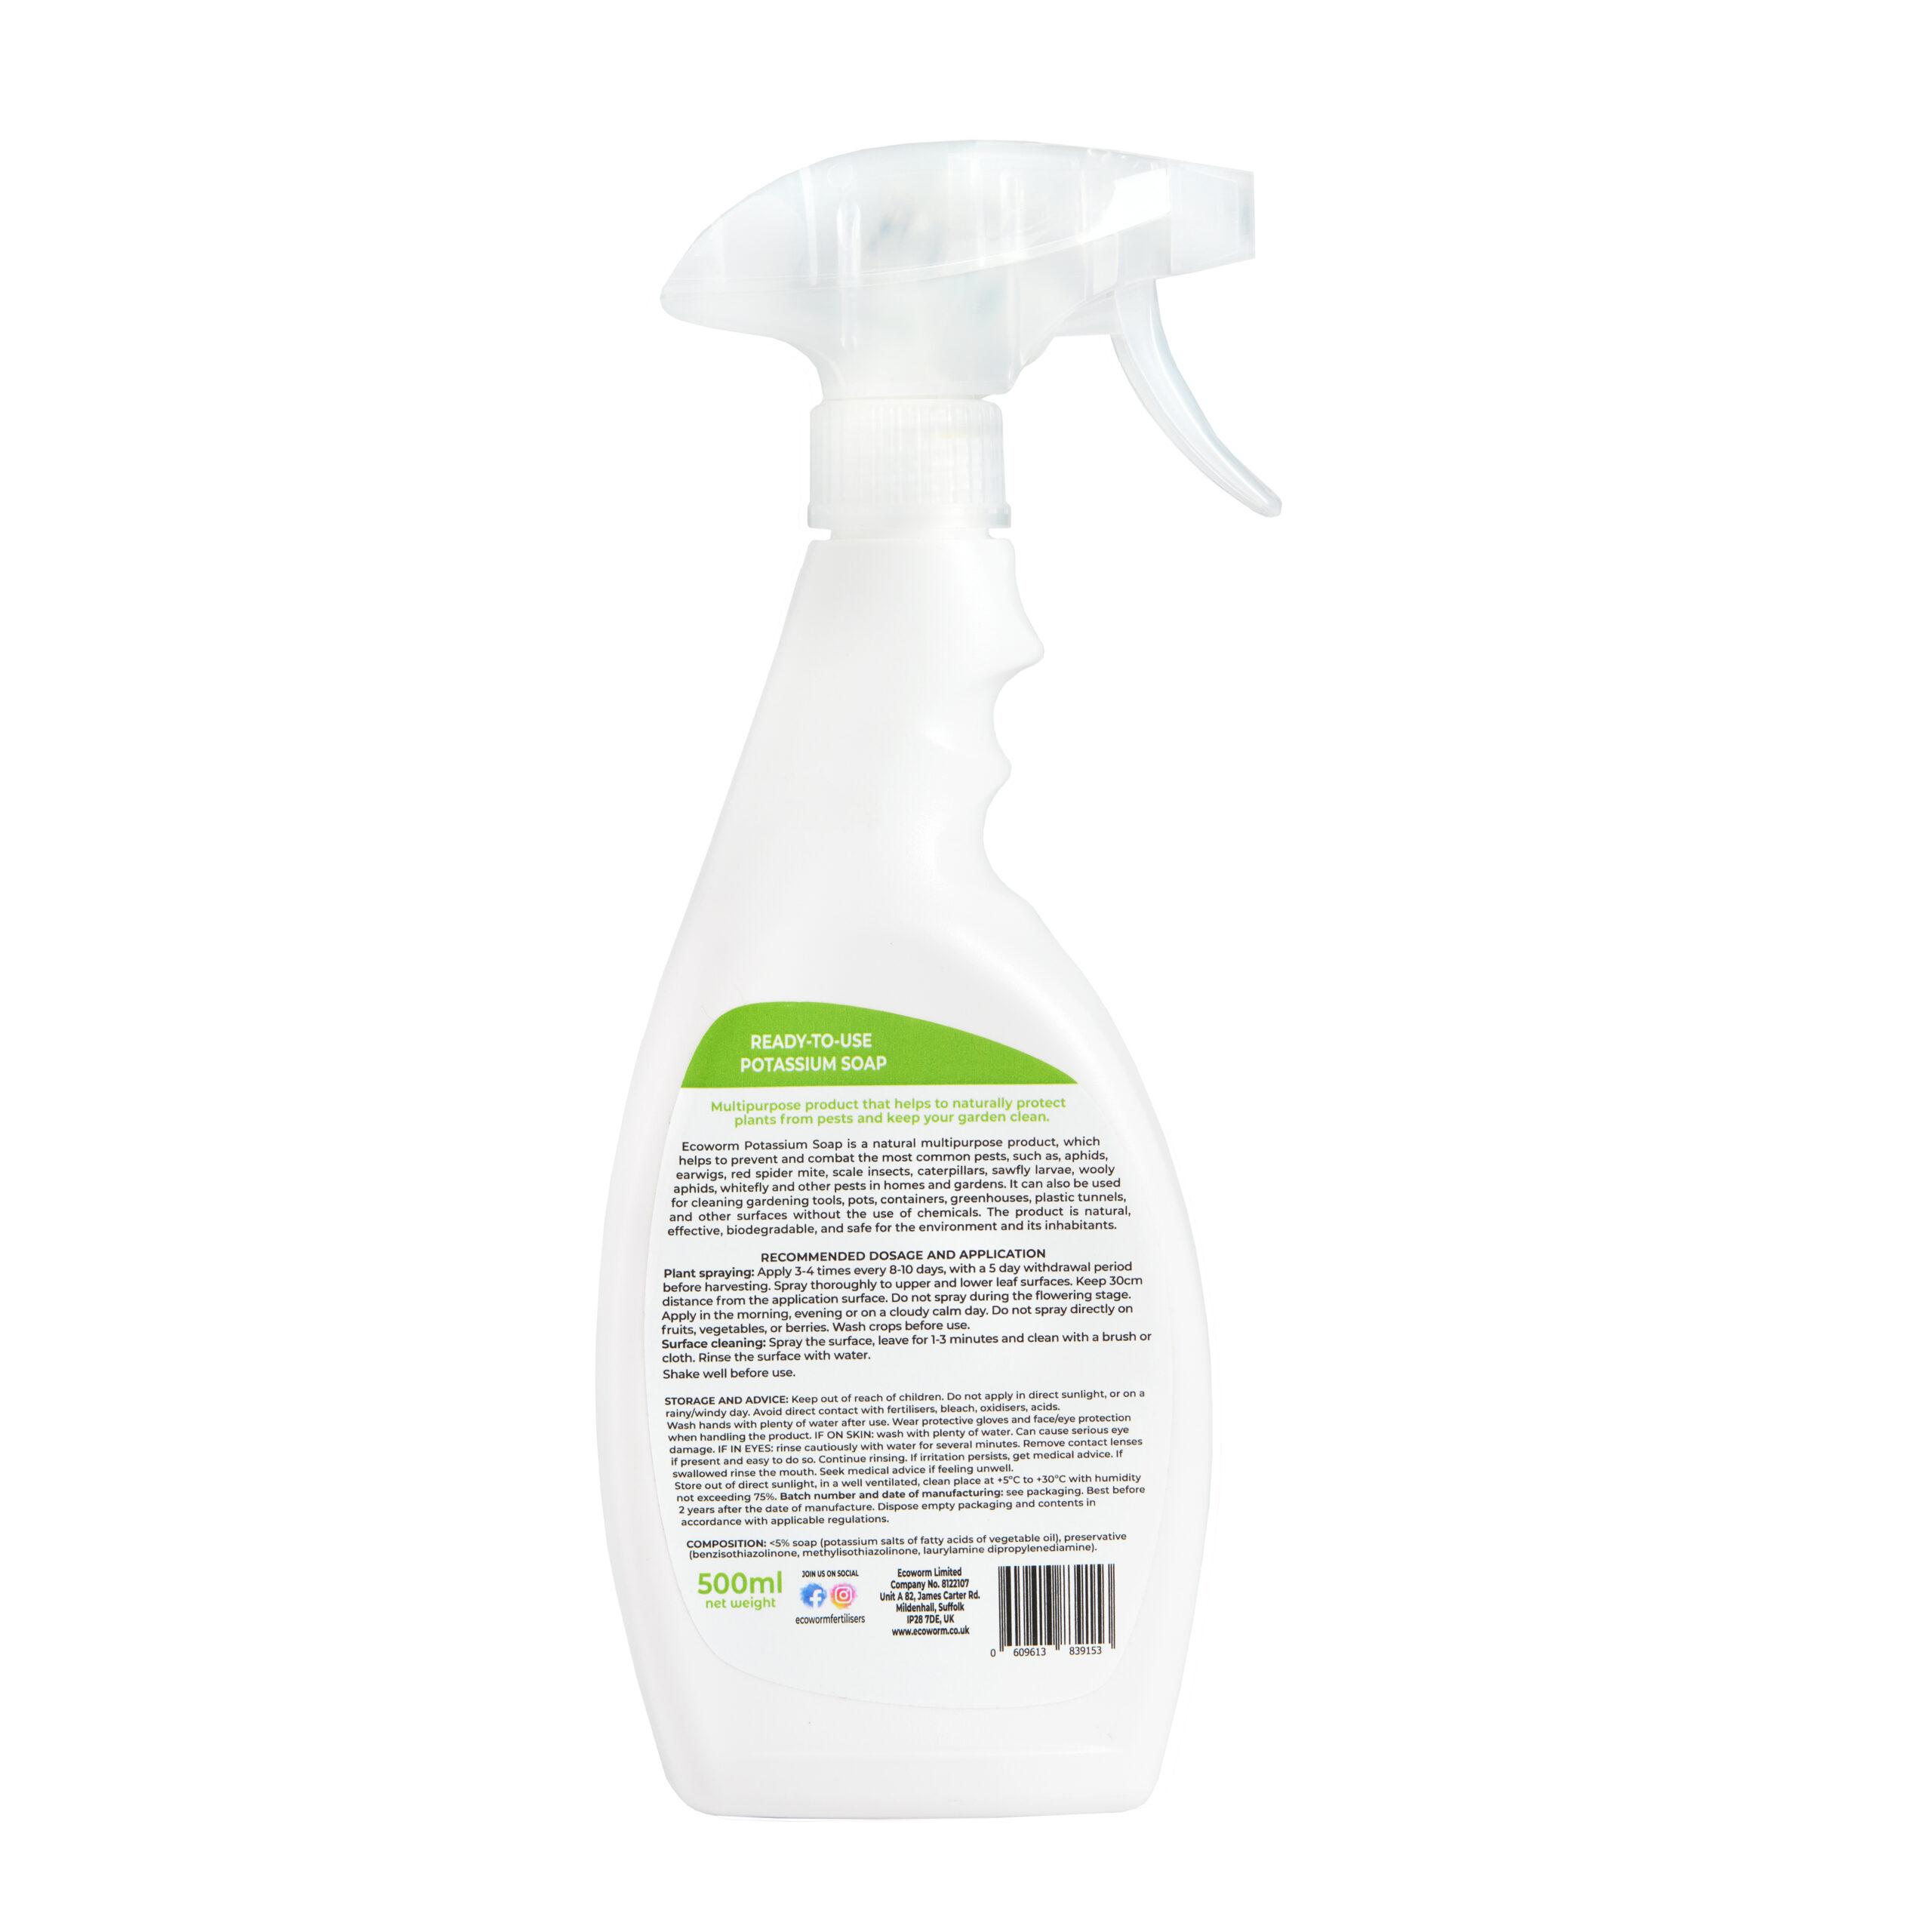 Clean & Guard Potassium Soap Spray 16.91 fl oz - Ecoworm Organic Fertilizer